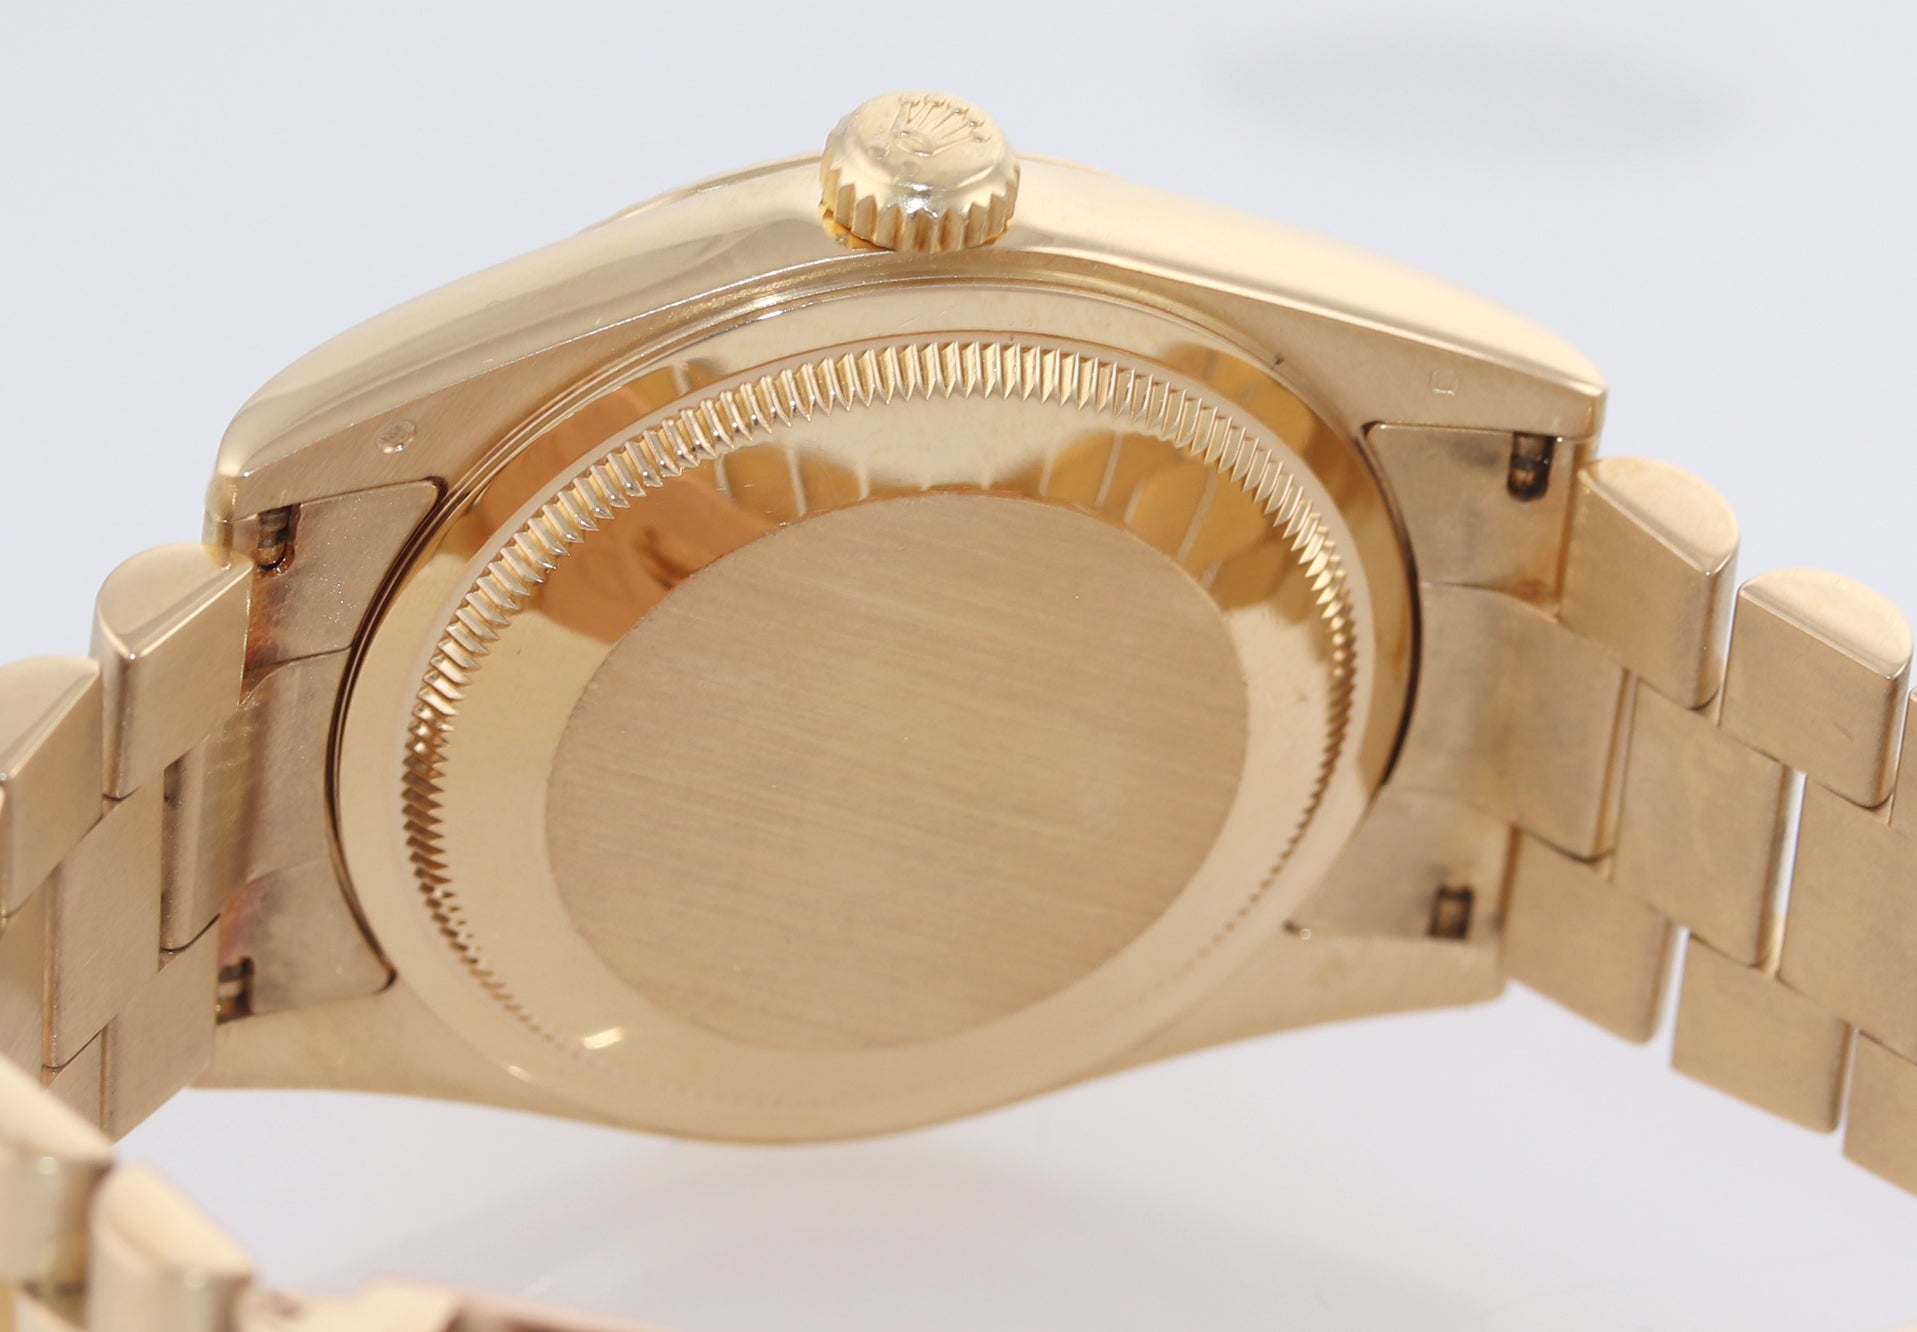 Rolex President Champagne Diamond Dial 18k Yellow Gold 118238 Modern Style Watch